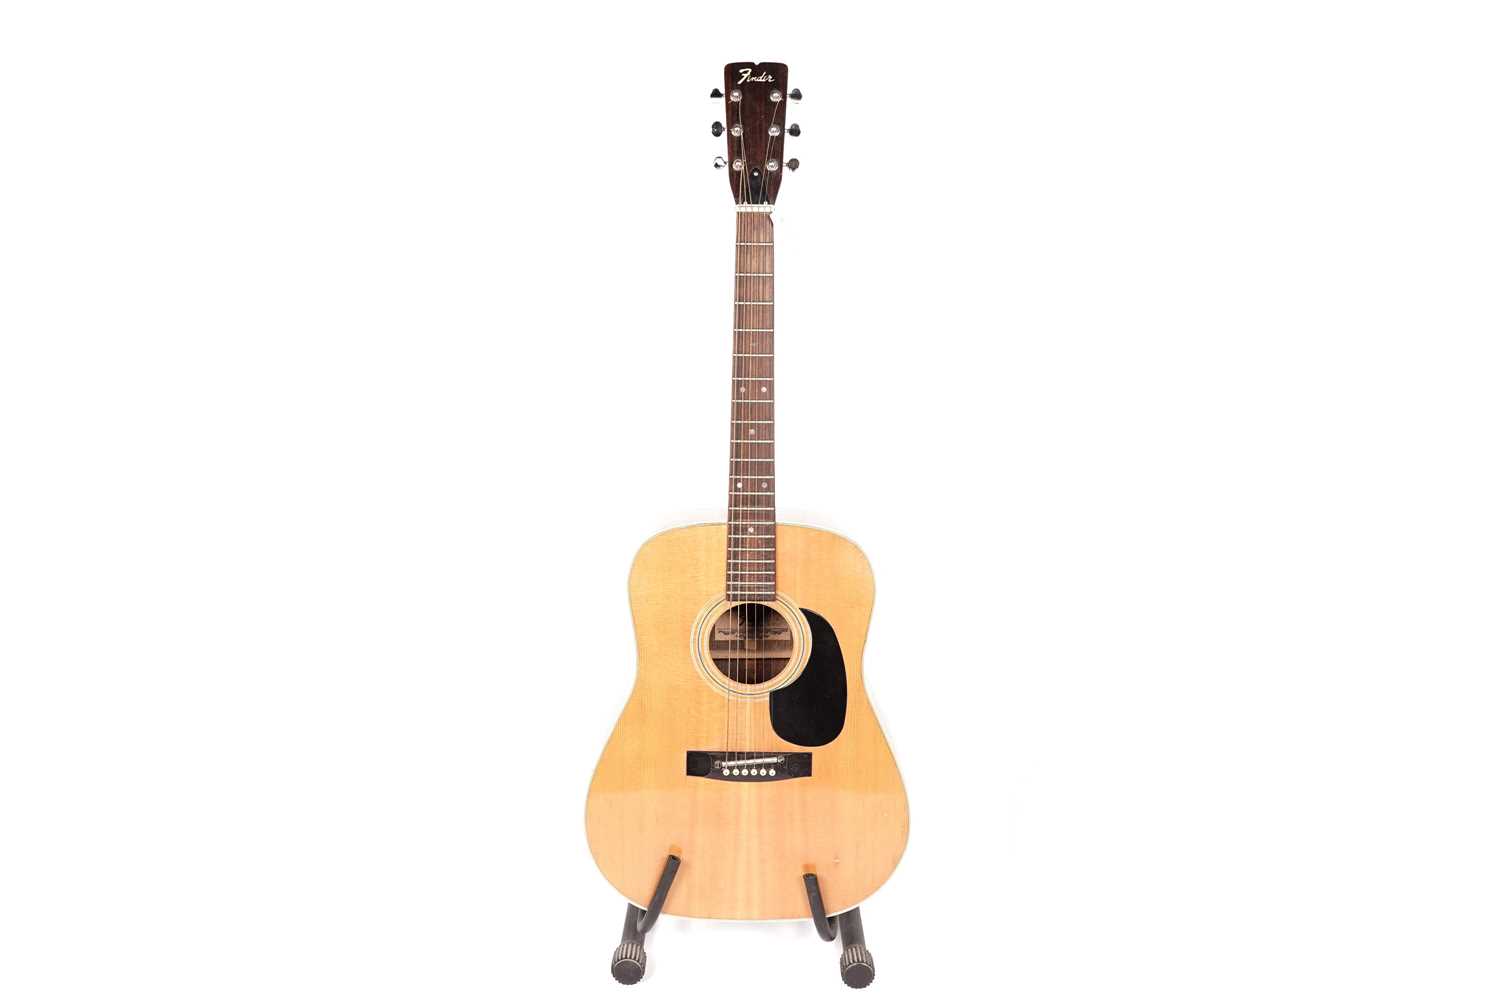 A Fender F-65 acoustic guitar